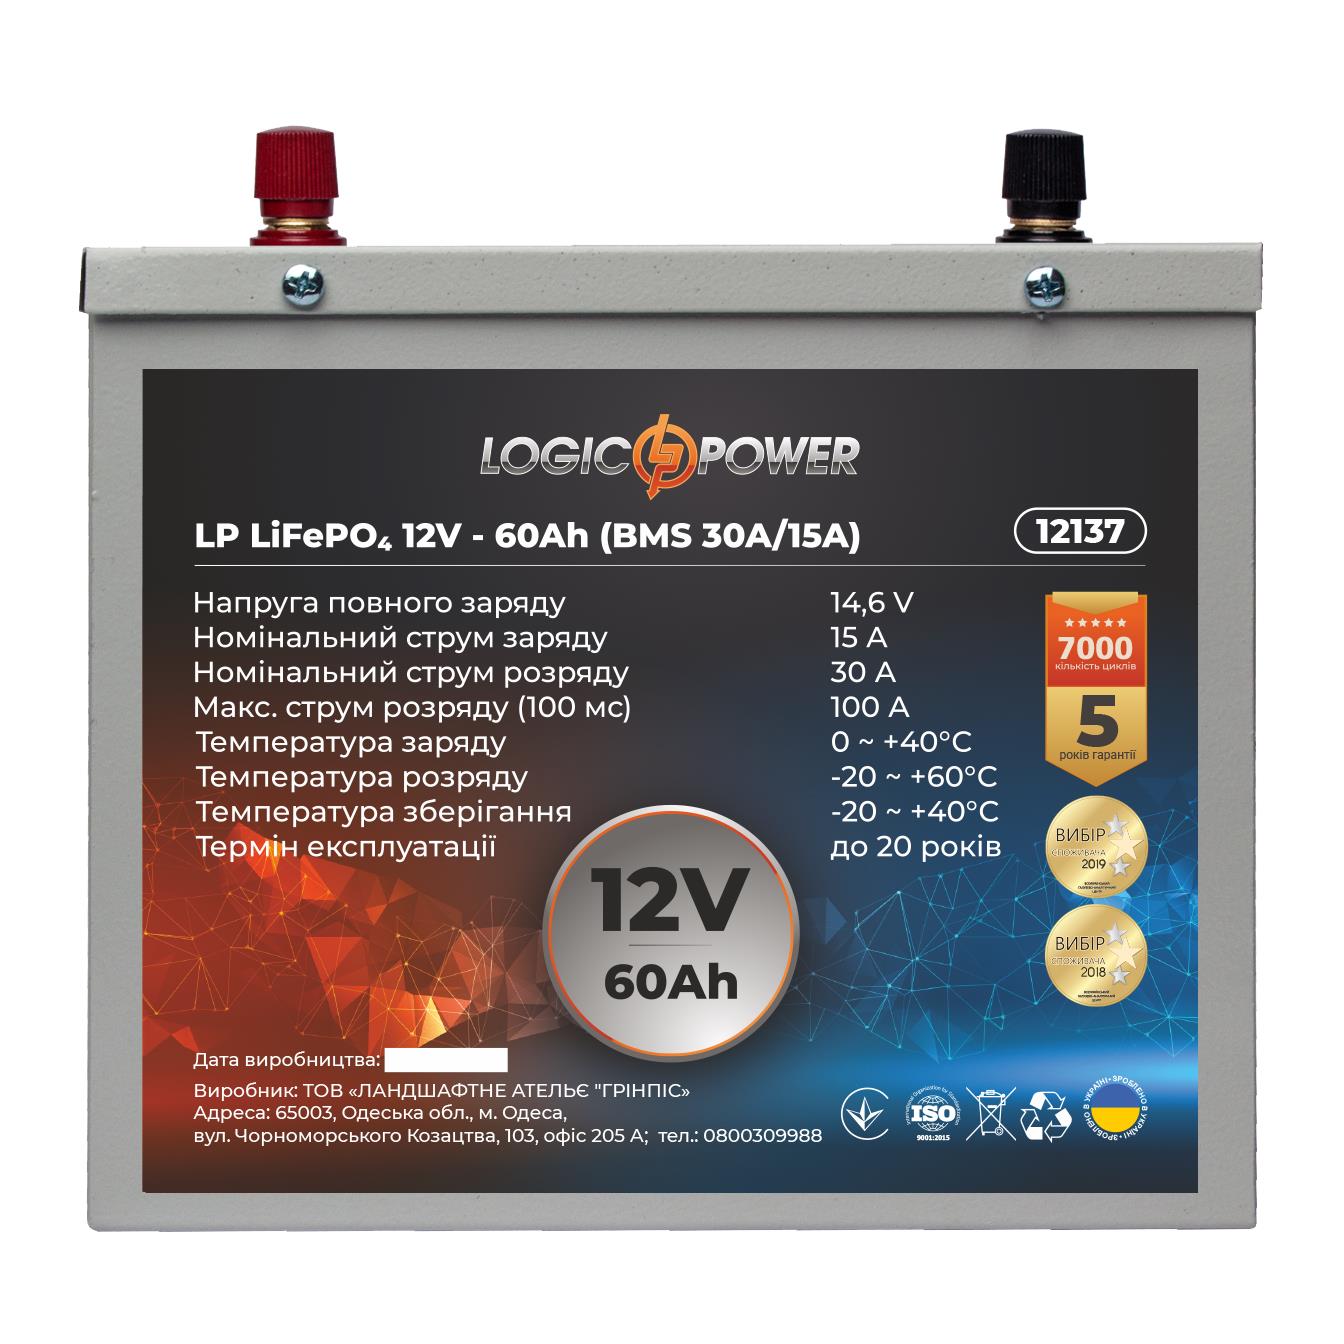 Акумулятор літій-залізо-фосфатний LogicPower LP LiFePO4 12V - 60 Ah (BMS 30A/15A) метал (12137)